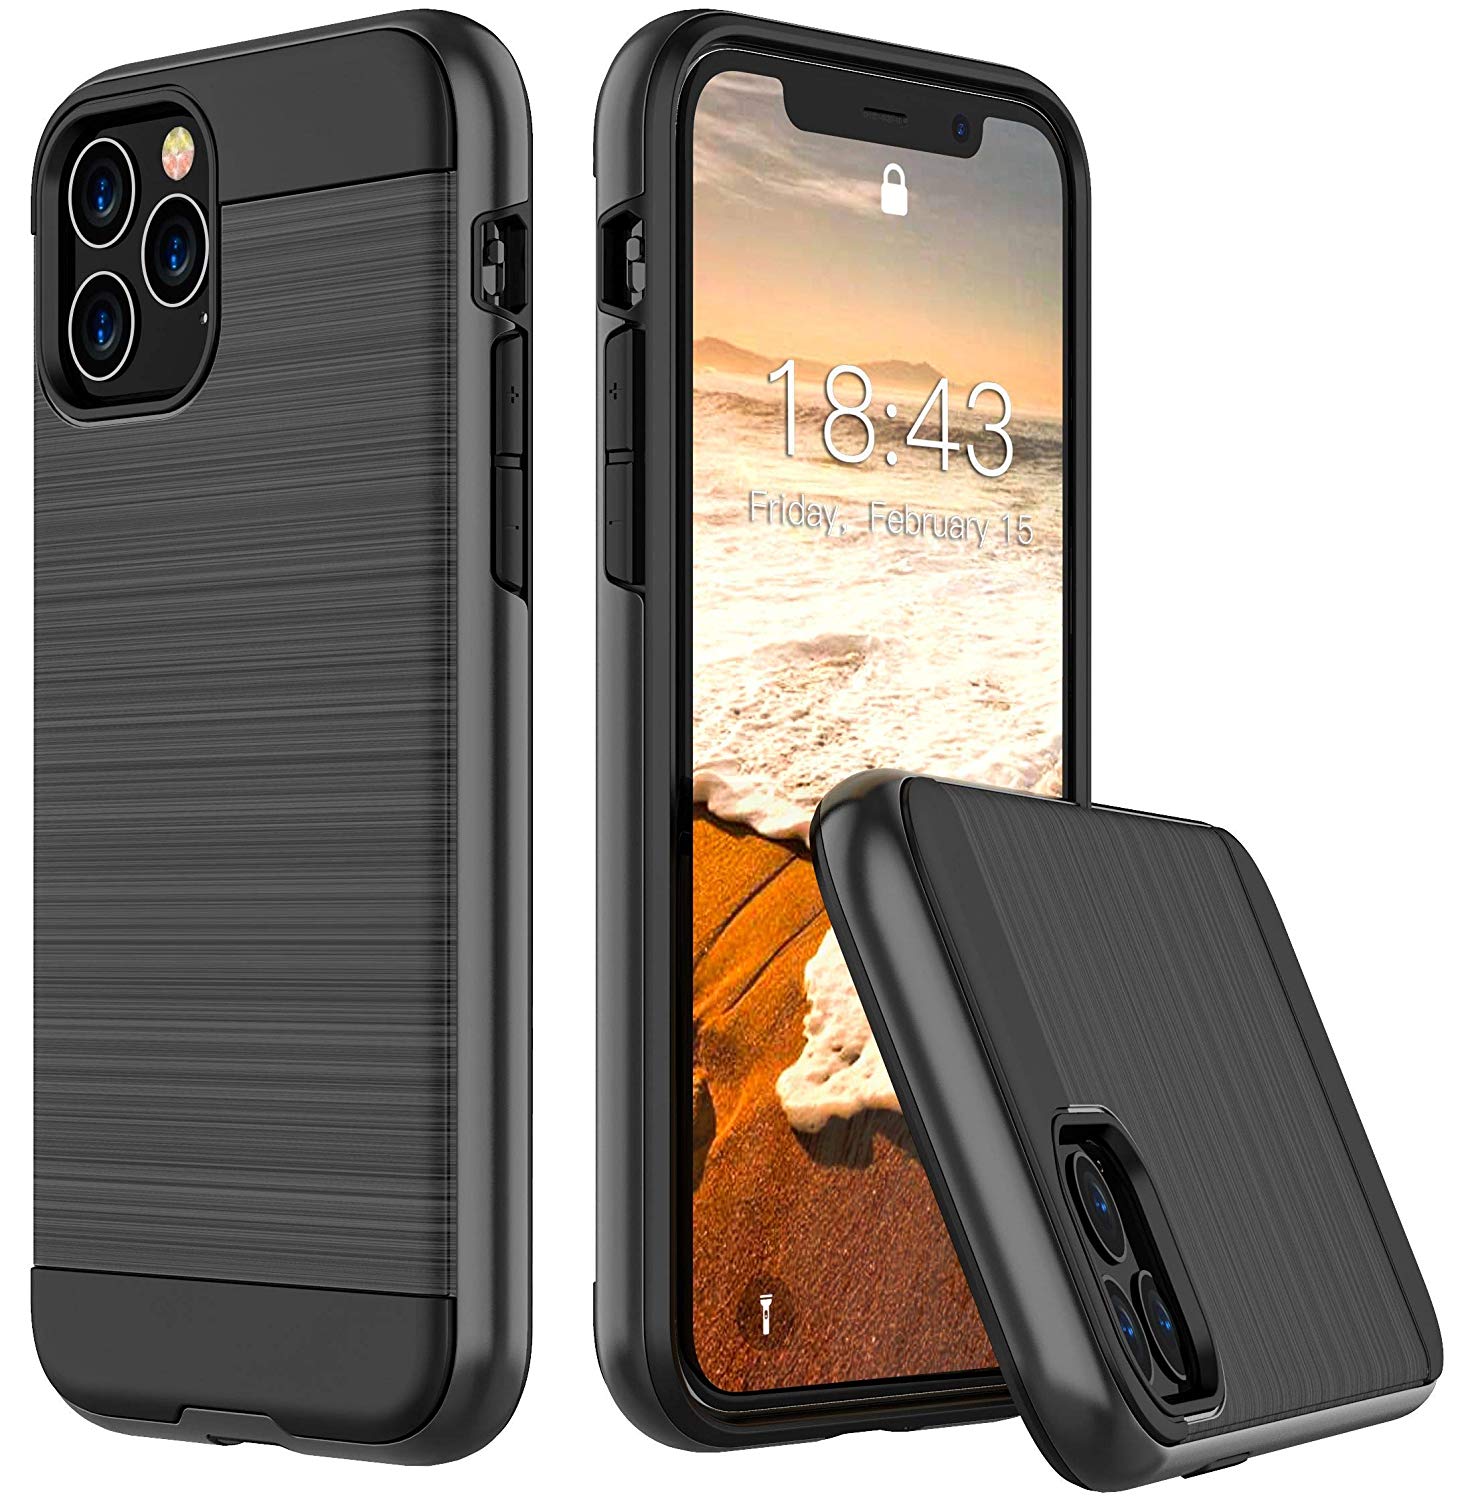 Oterkin-iPhone-11-Pro-Max-cheap-case